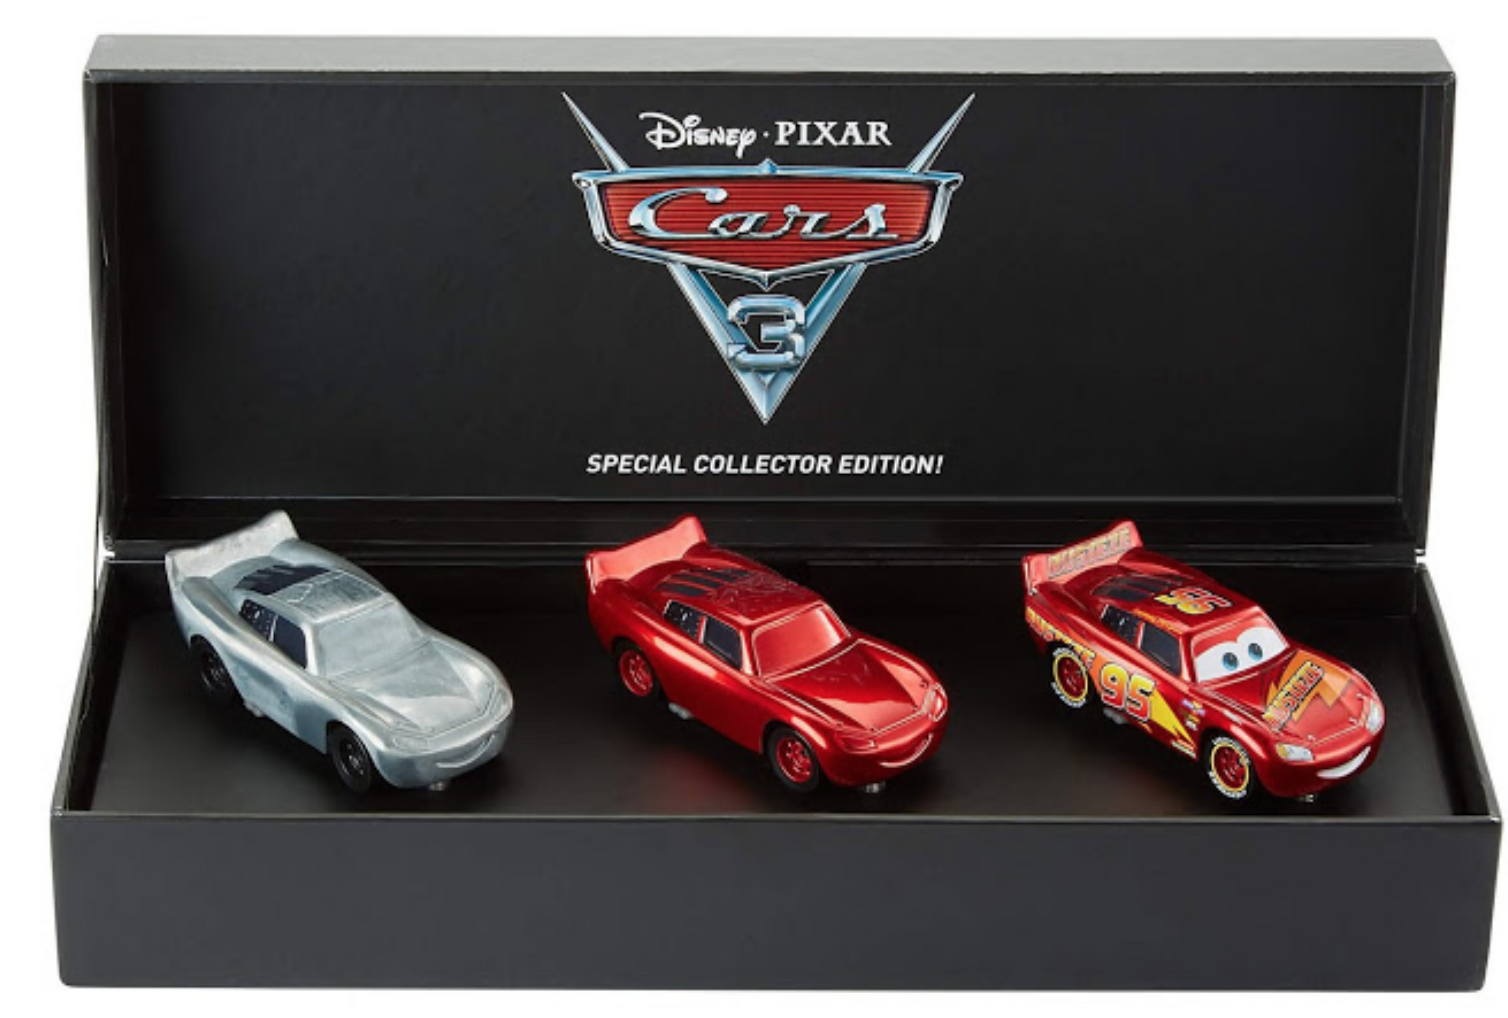 Mattel Disney Pixar Cars3 Cars 3 Diecast Car Fillmore for sale online 